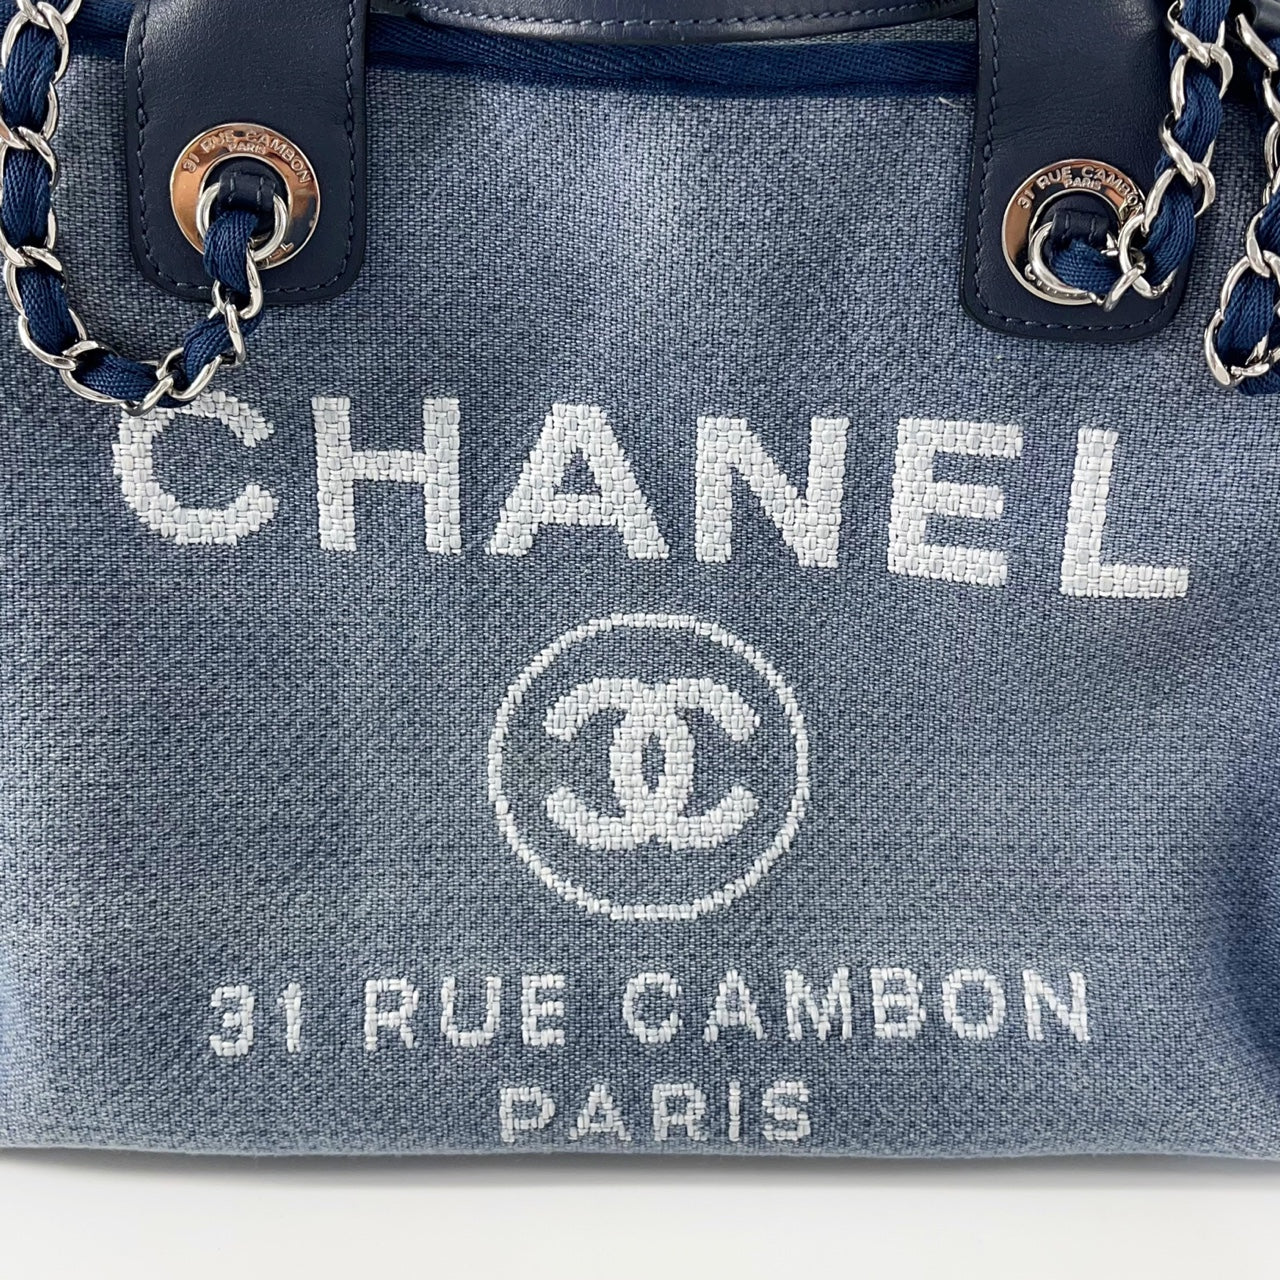 Chanel 2021 Small Destination Chenonceau Bowling Bag - Blue